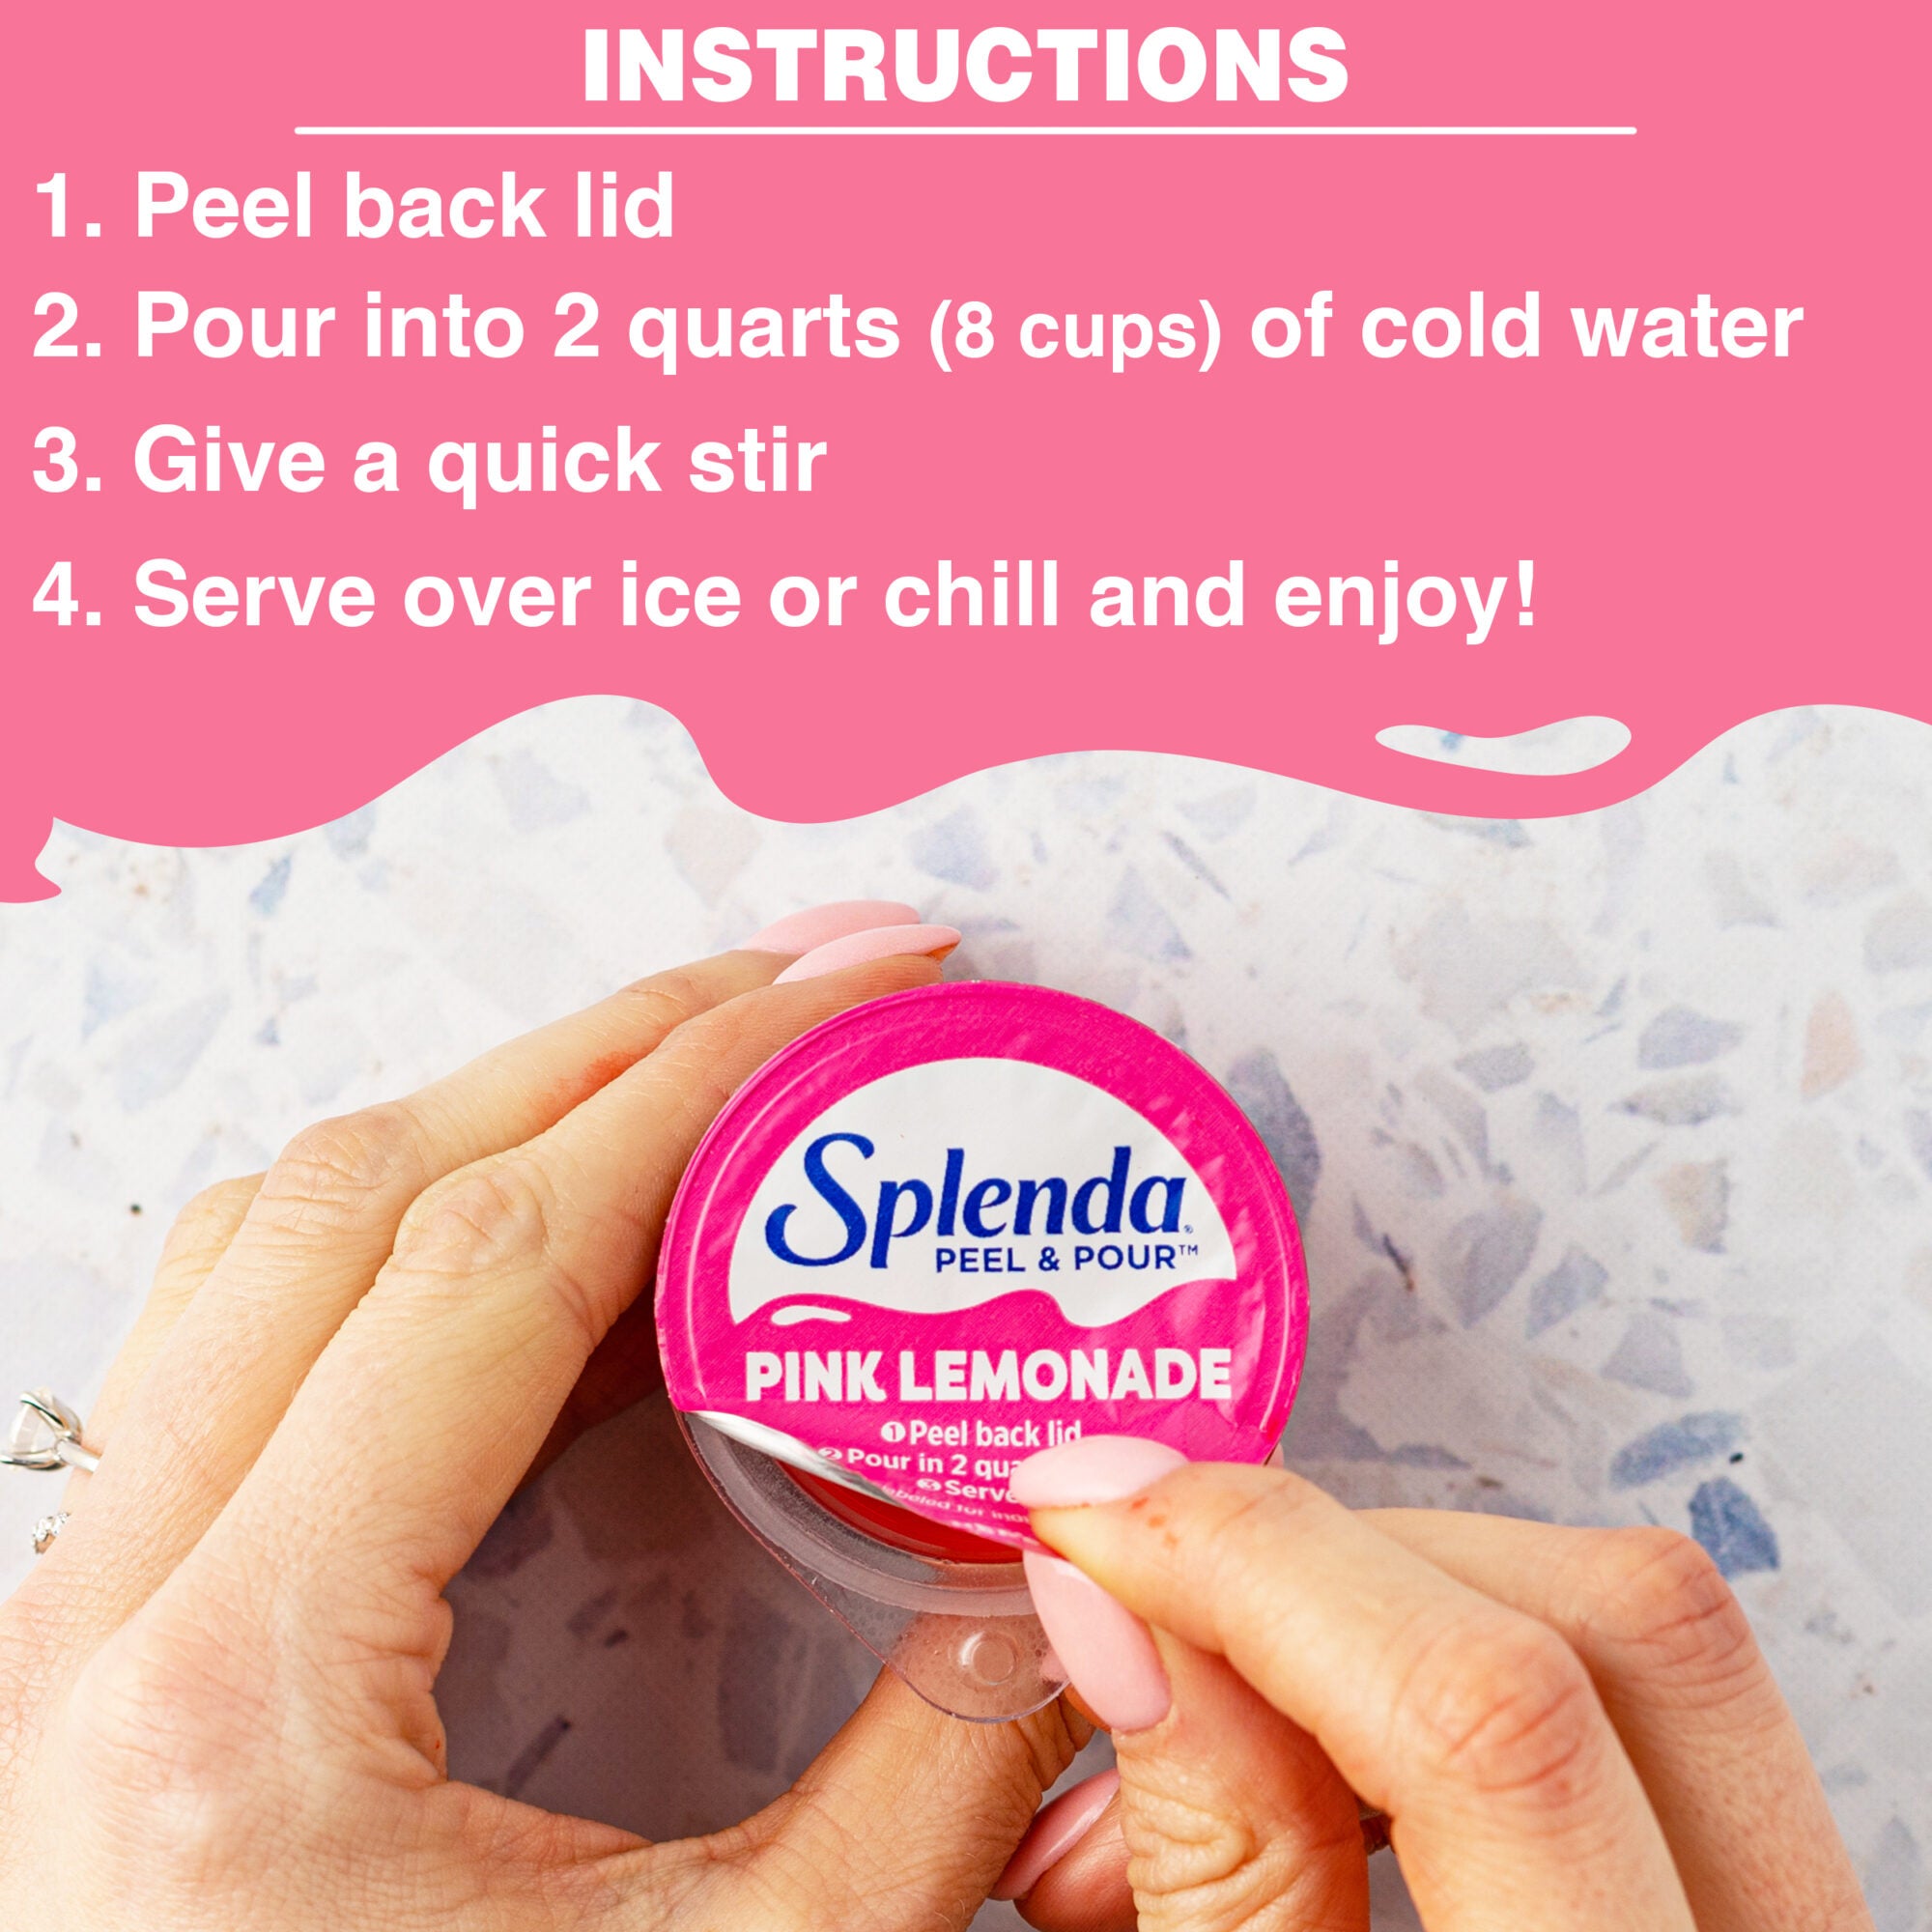 Splenda Peel & Pour Pink Lemonade Zero Sugar Drink Mix – Instructions